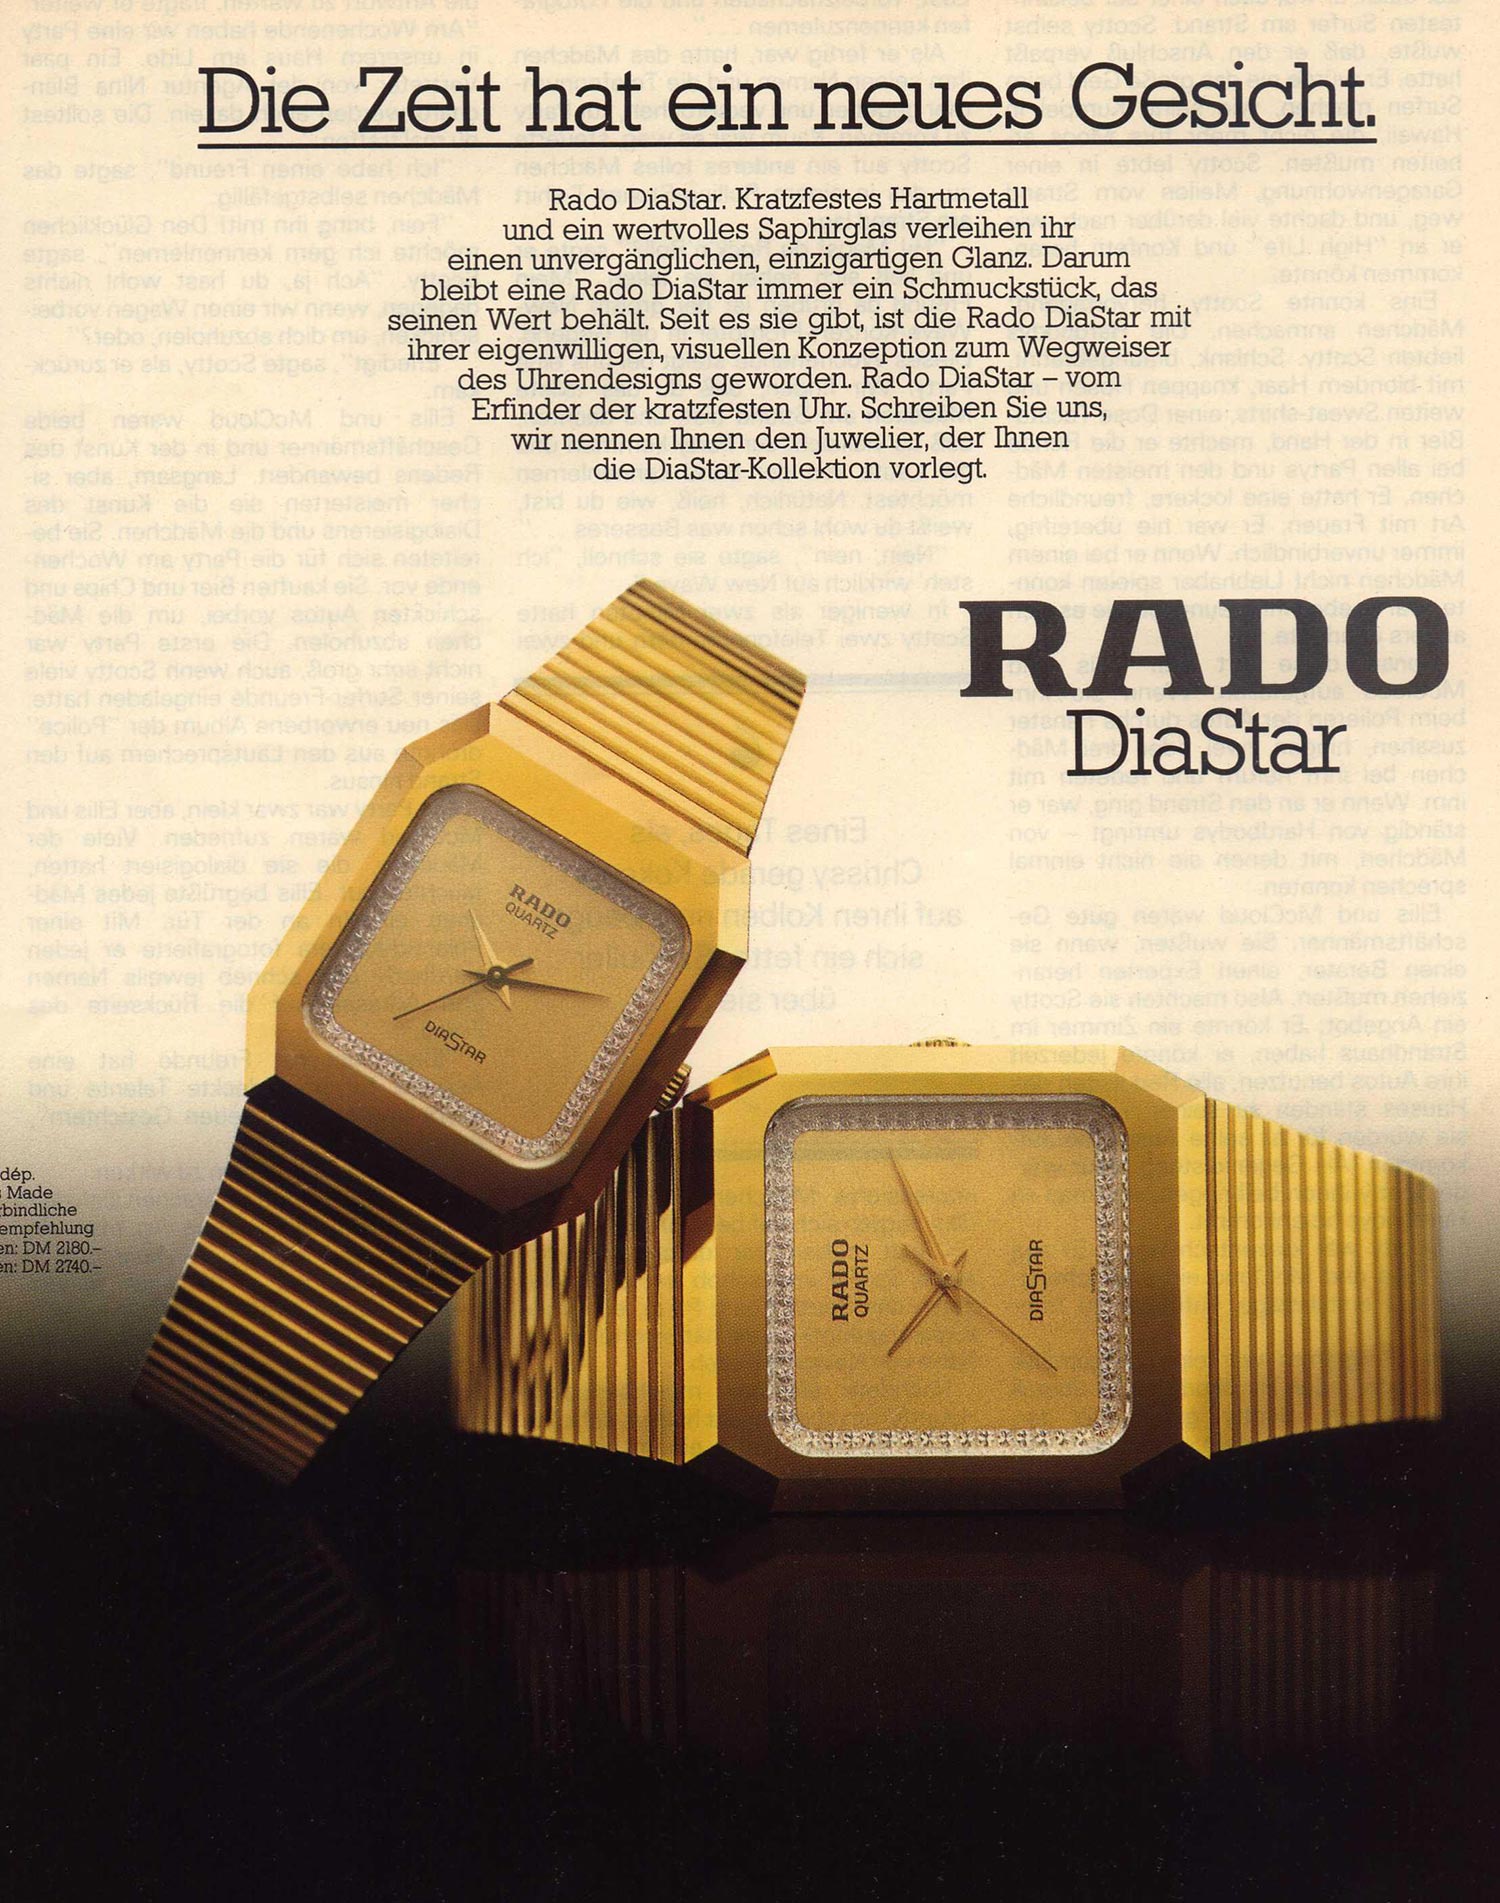 Rado Diastar advertising campaign